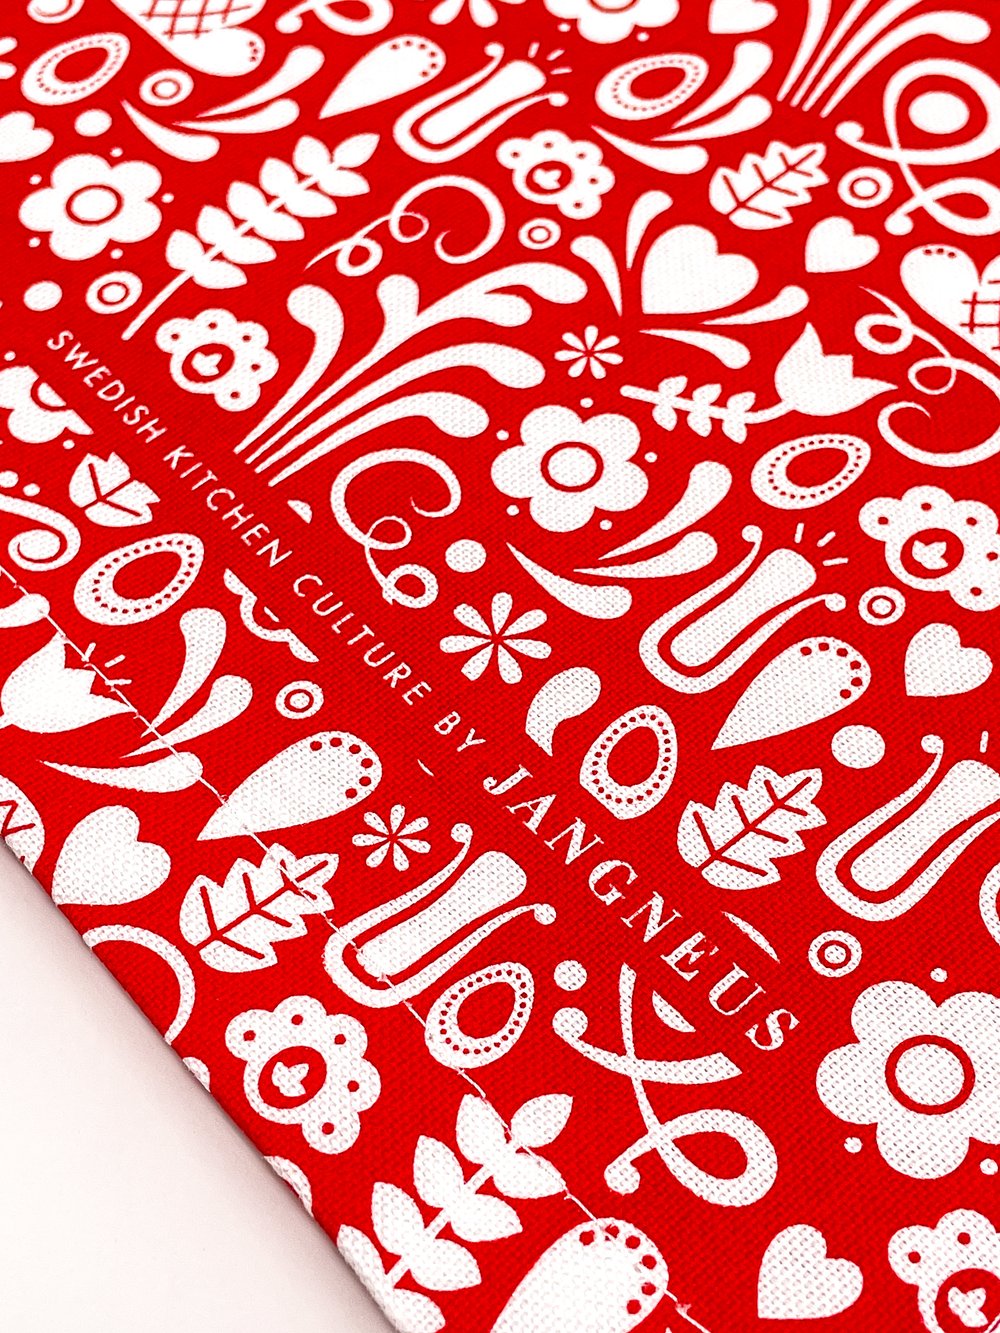 Christmas Swedish Themed Dishcloths Non-Scratch Soft Dish Towels